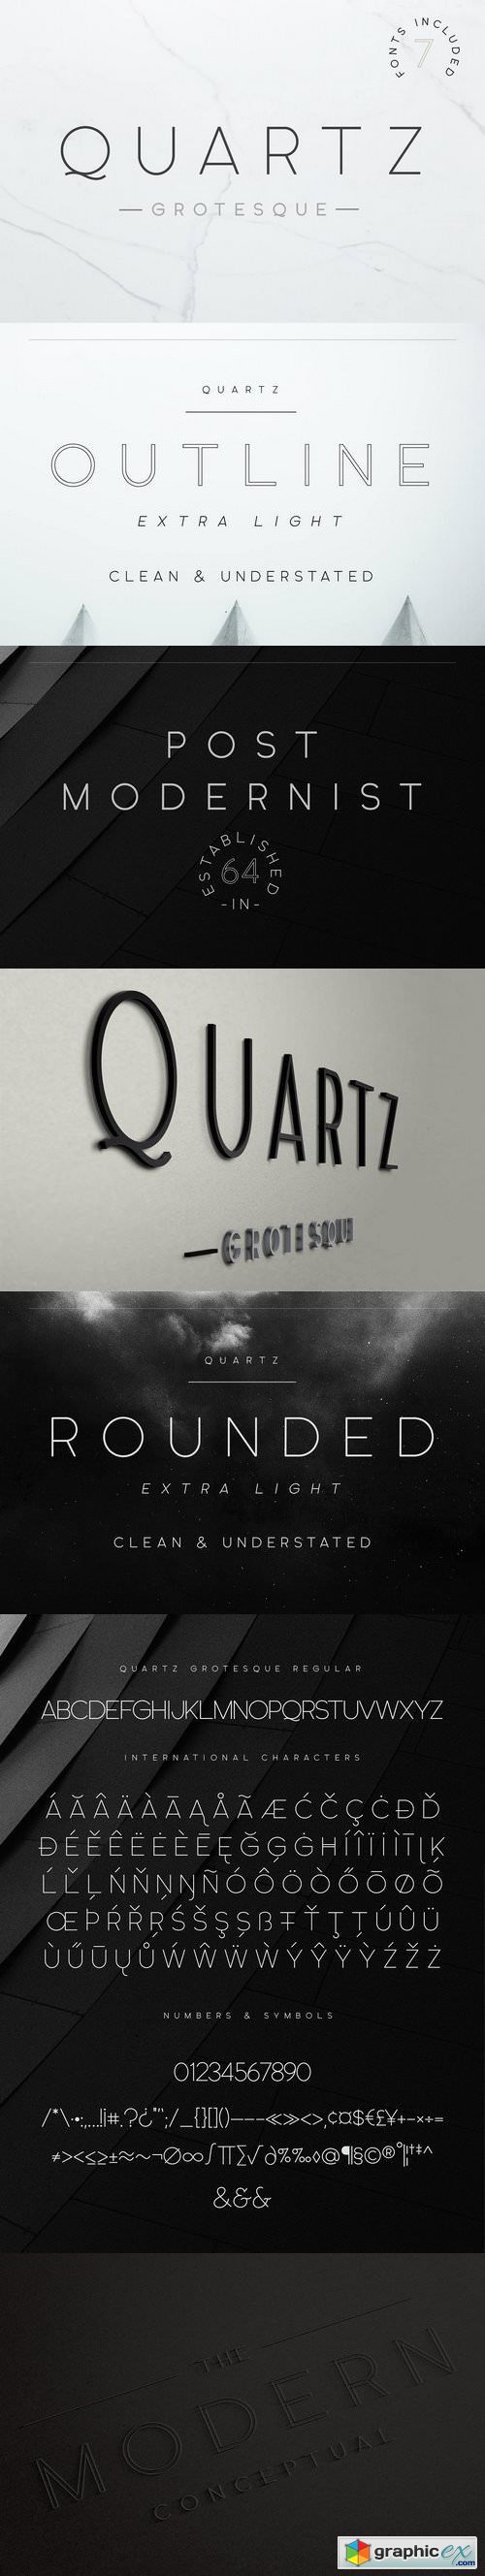 Quartz Grotesque - 7 Font Styles